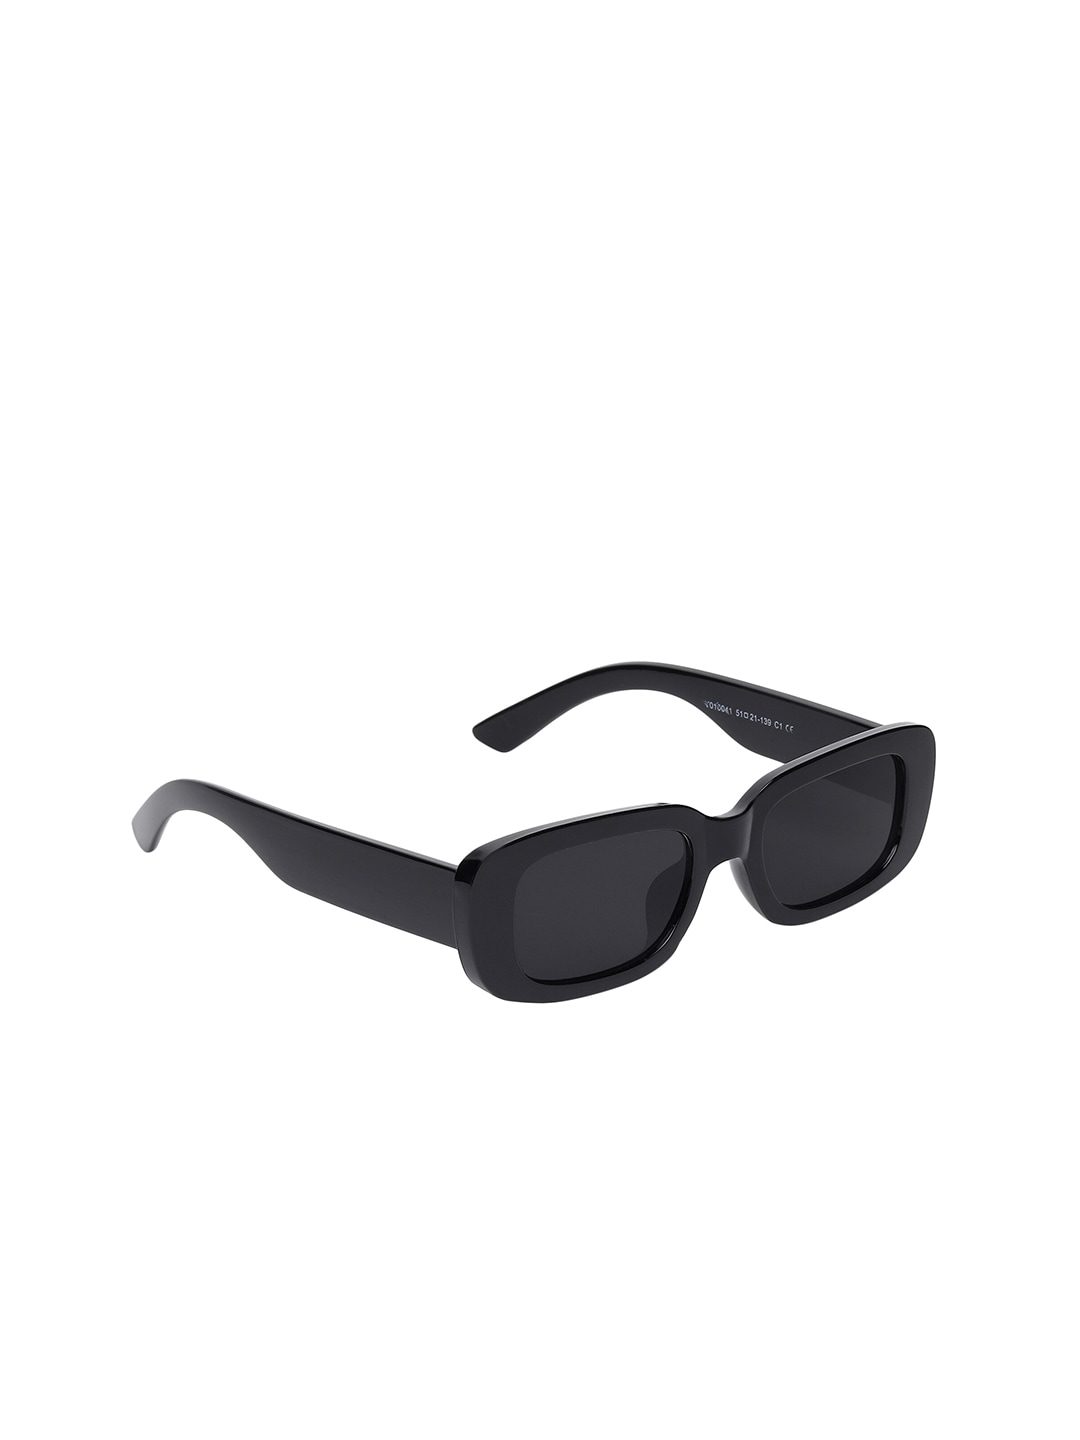 ALIGATORR Unisex Black Lens & Black UV Protected Rectangle Sunglasses AGR_CANDY 260 Price in India